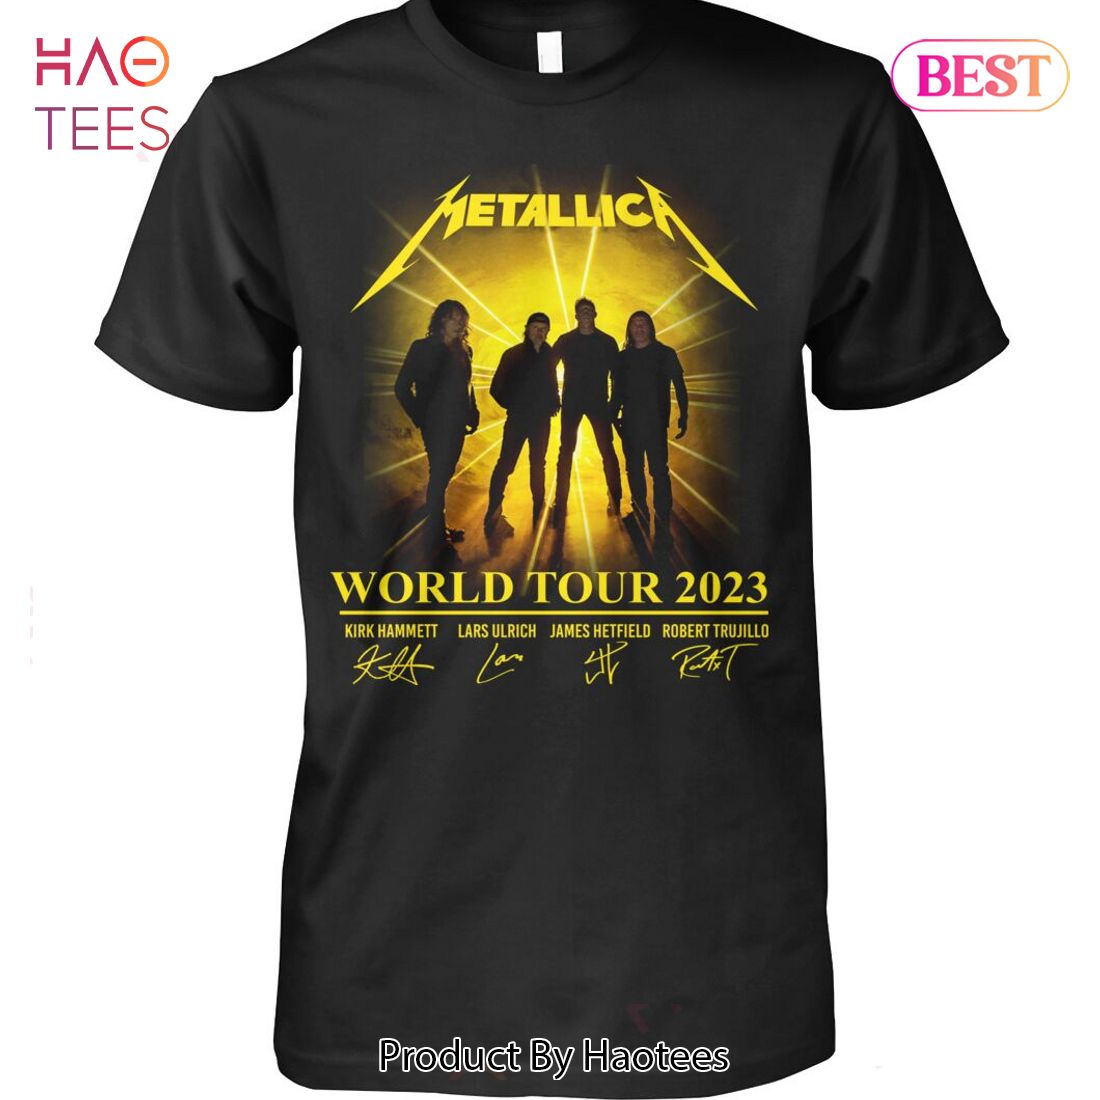 NEW Metallic World Tour 2023 Unisex T-Shirt